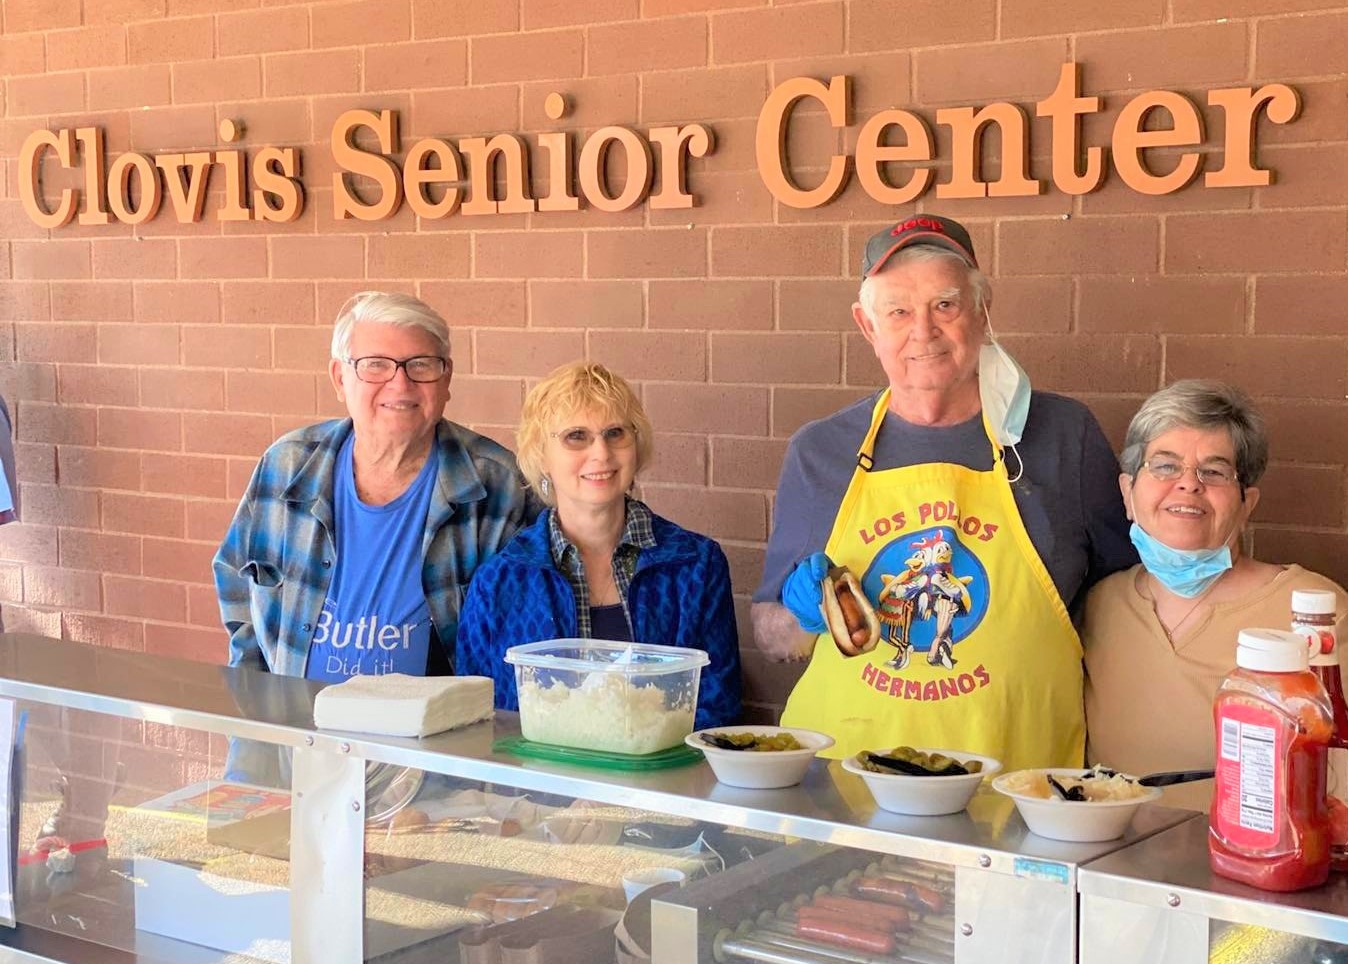 Volunteer workers at the Clovis Senior Center